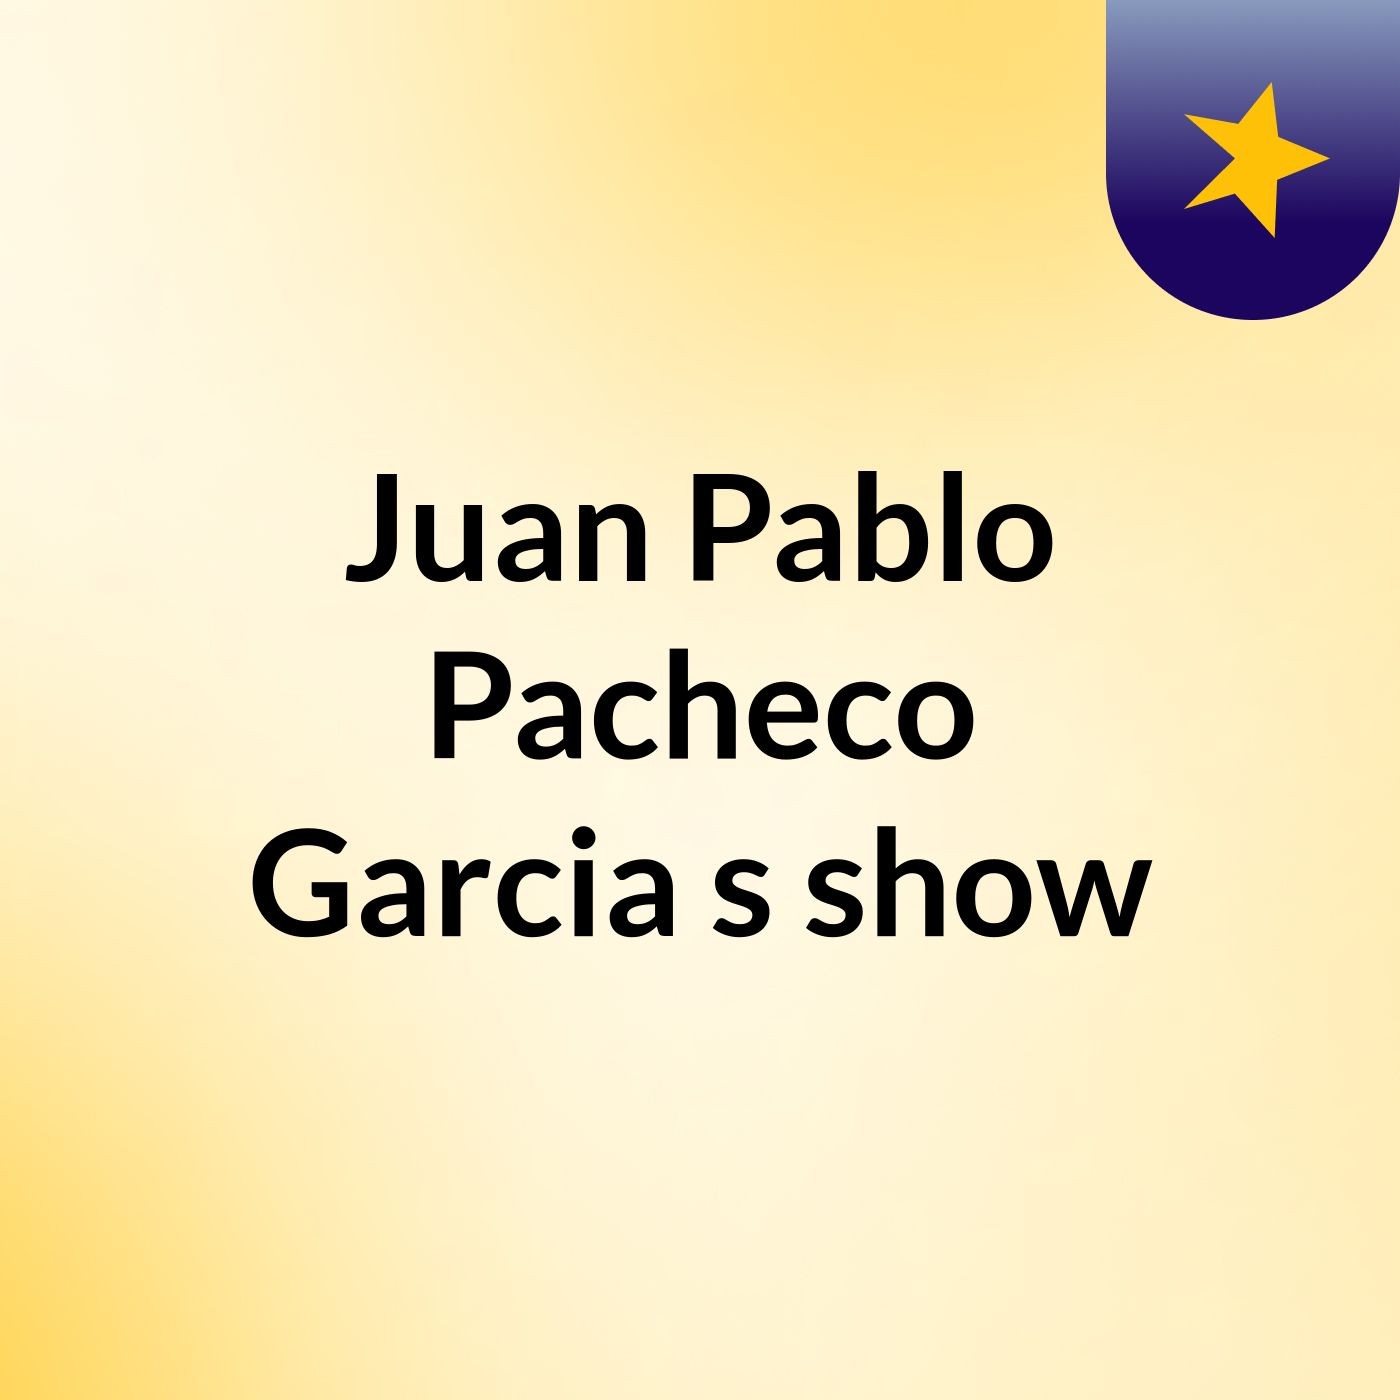 Juan Pablo Pacheco Garcia's show